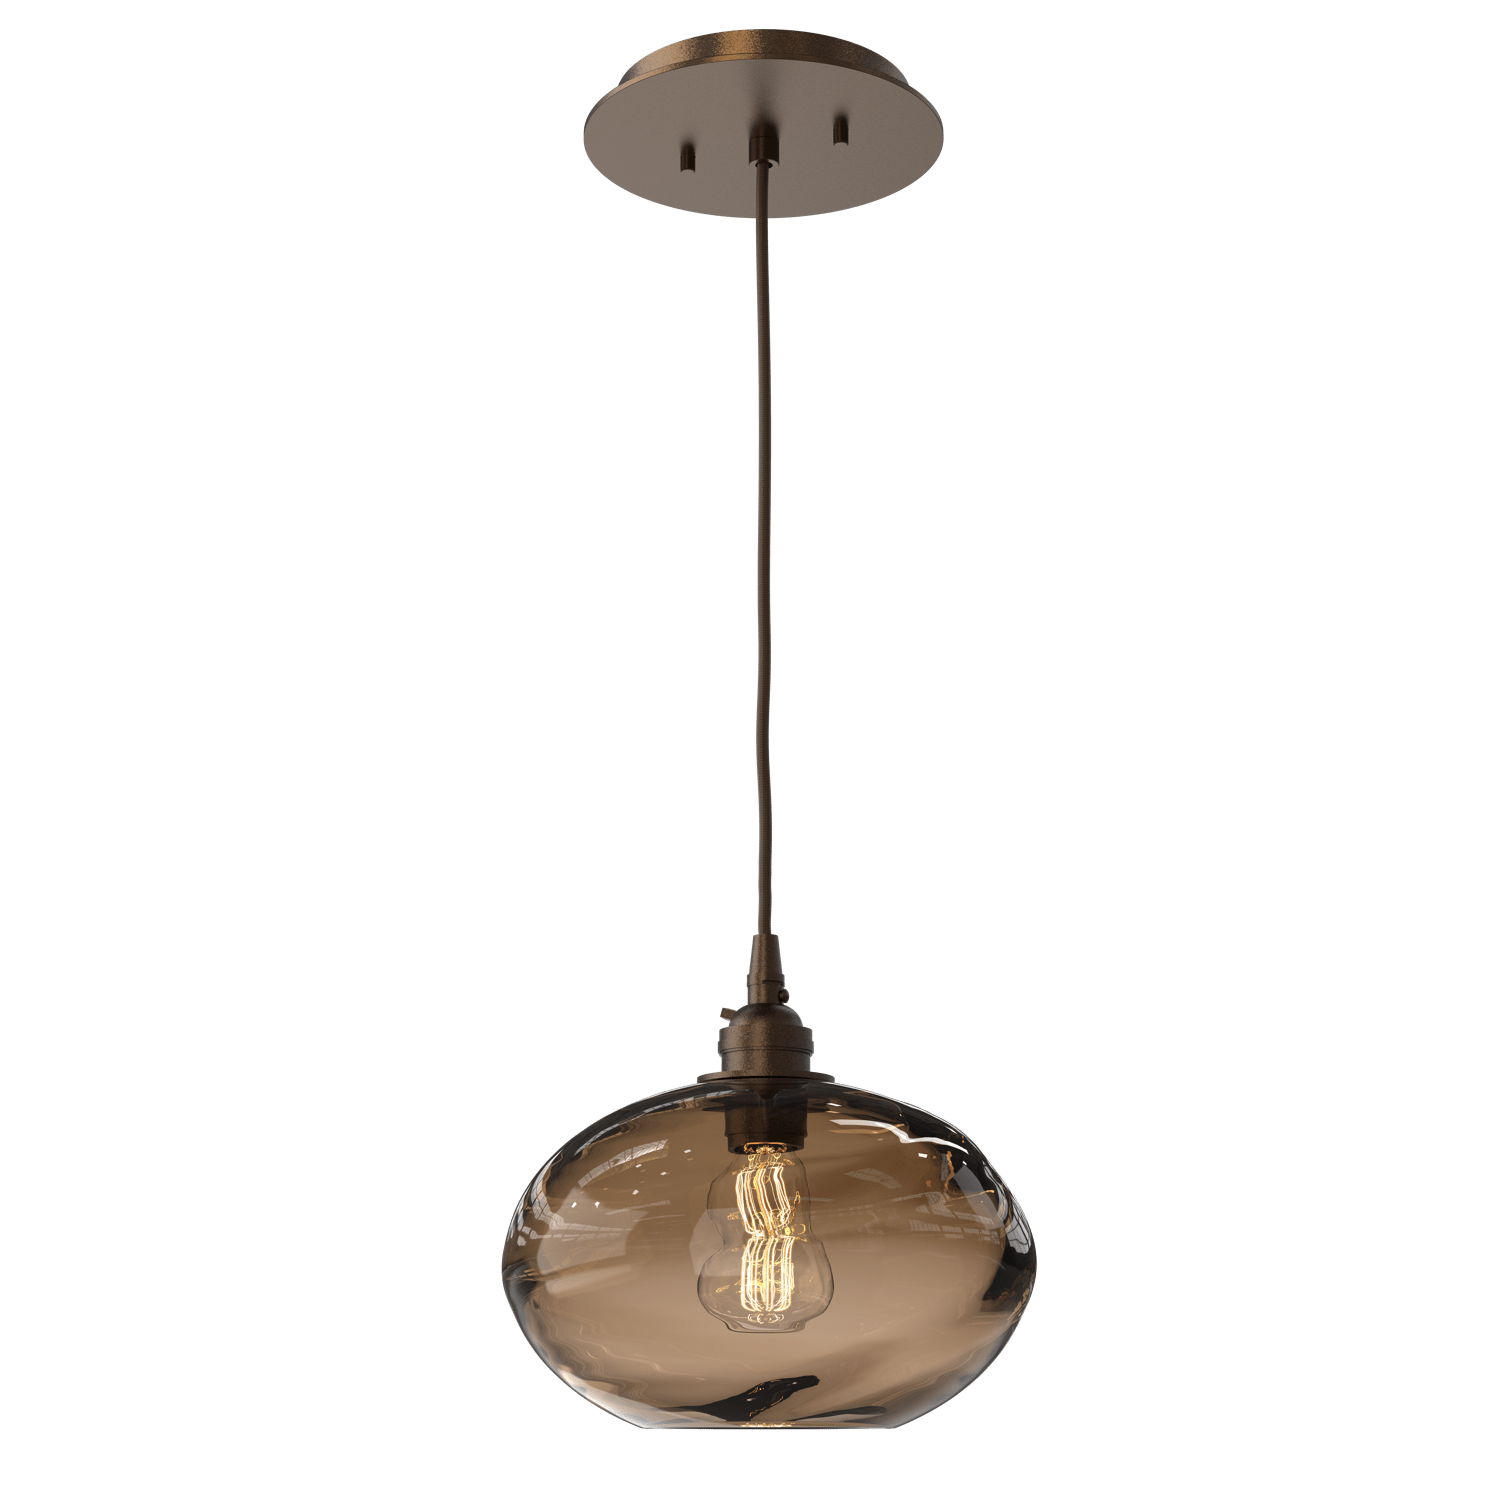 LAB0036-01-FB-OB-Hammerton-Studio-Optic-Blown-Glass-Coppa-pendant-light-with-flat-bronze-finish-and-optic-bronze-blown-glass-shades-and-incandescent-lamping